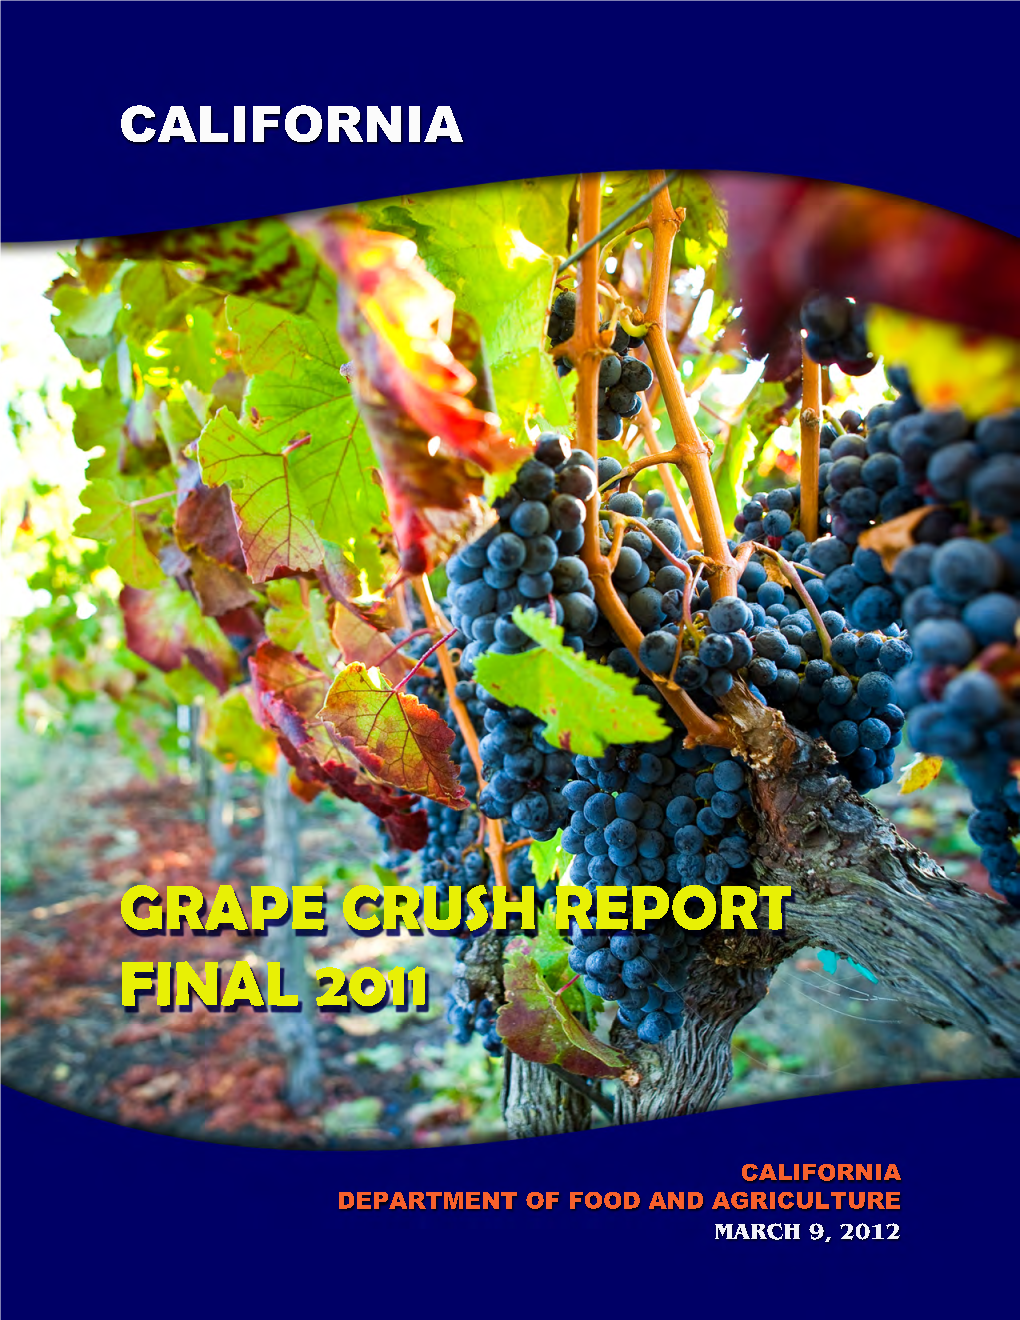 2011 Final Grape Crush Report